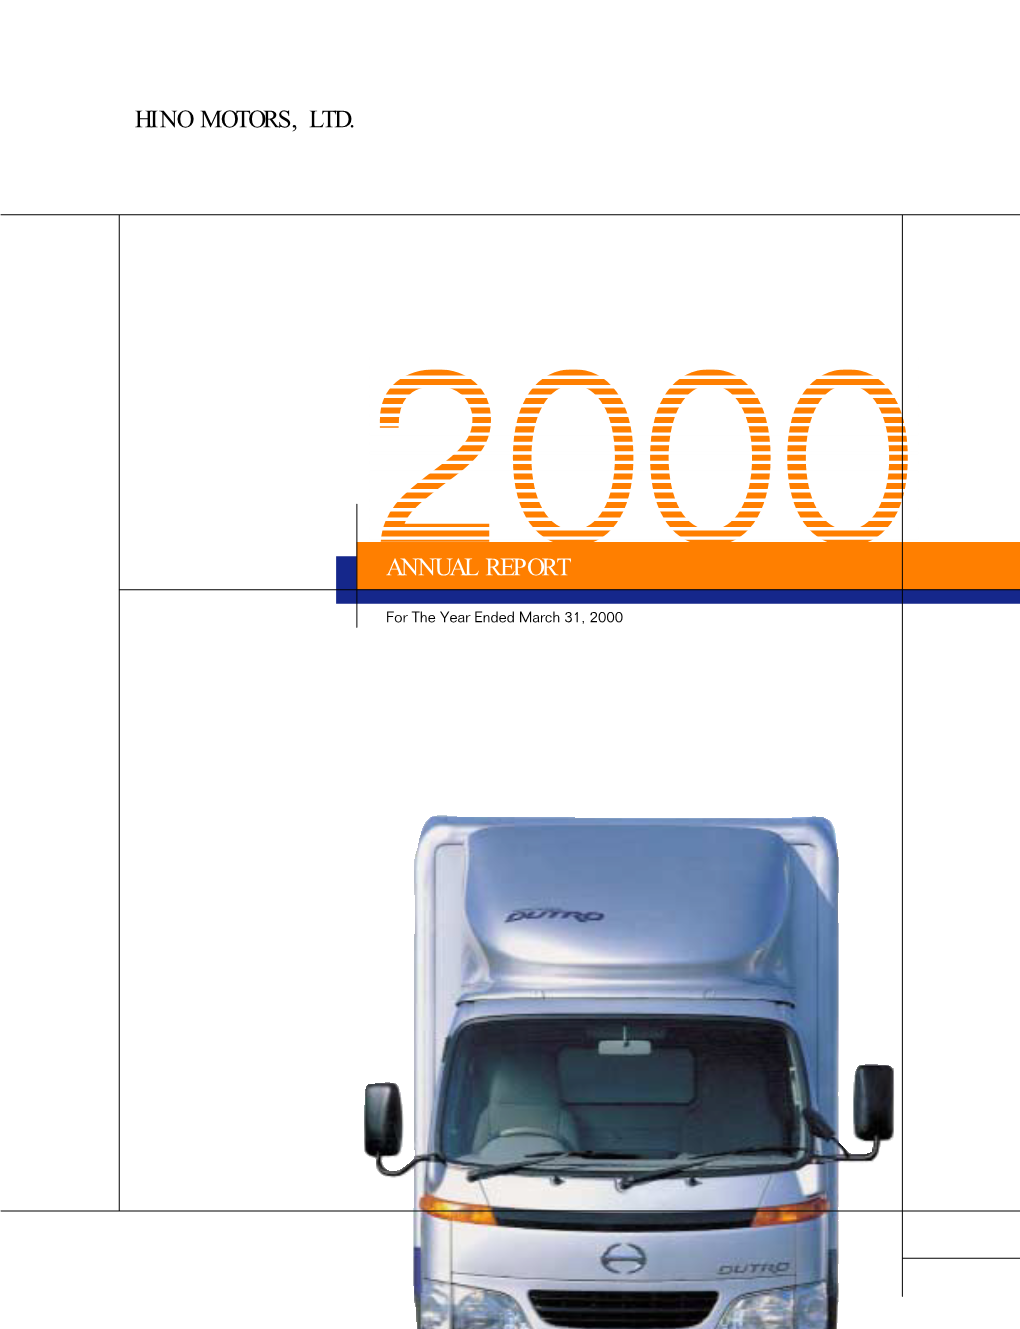 Hino Motors, Ltd. Annual Report